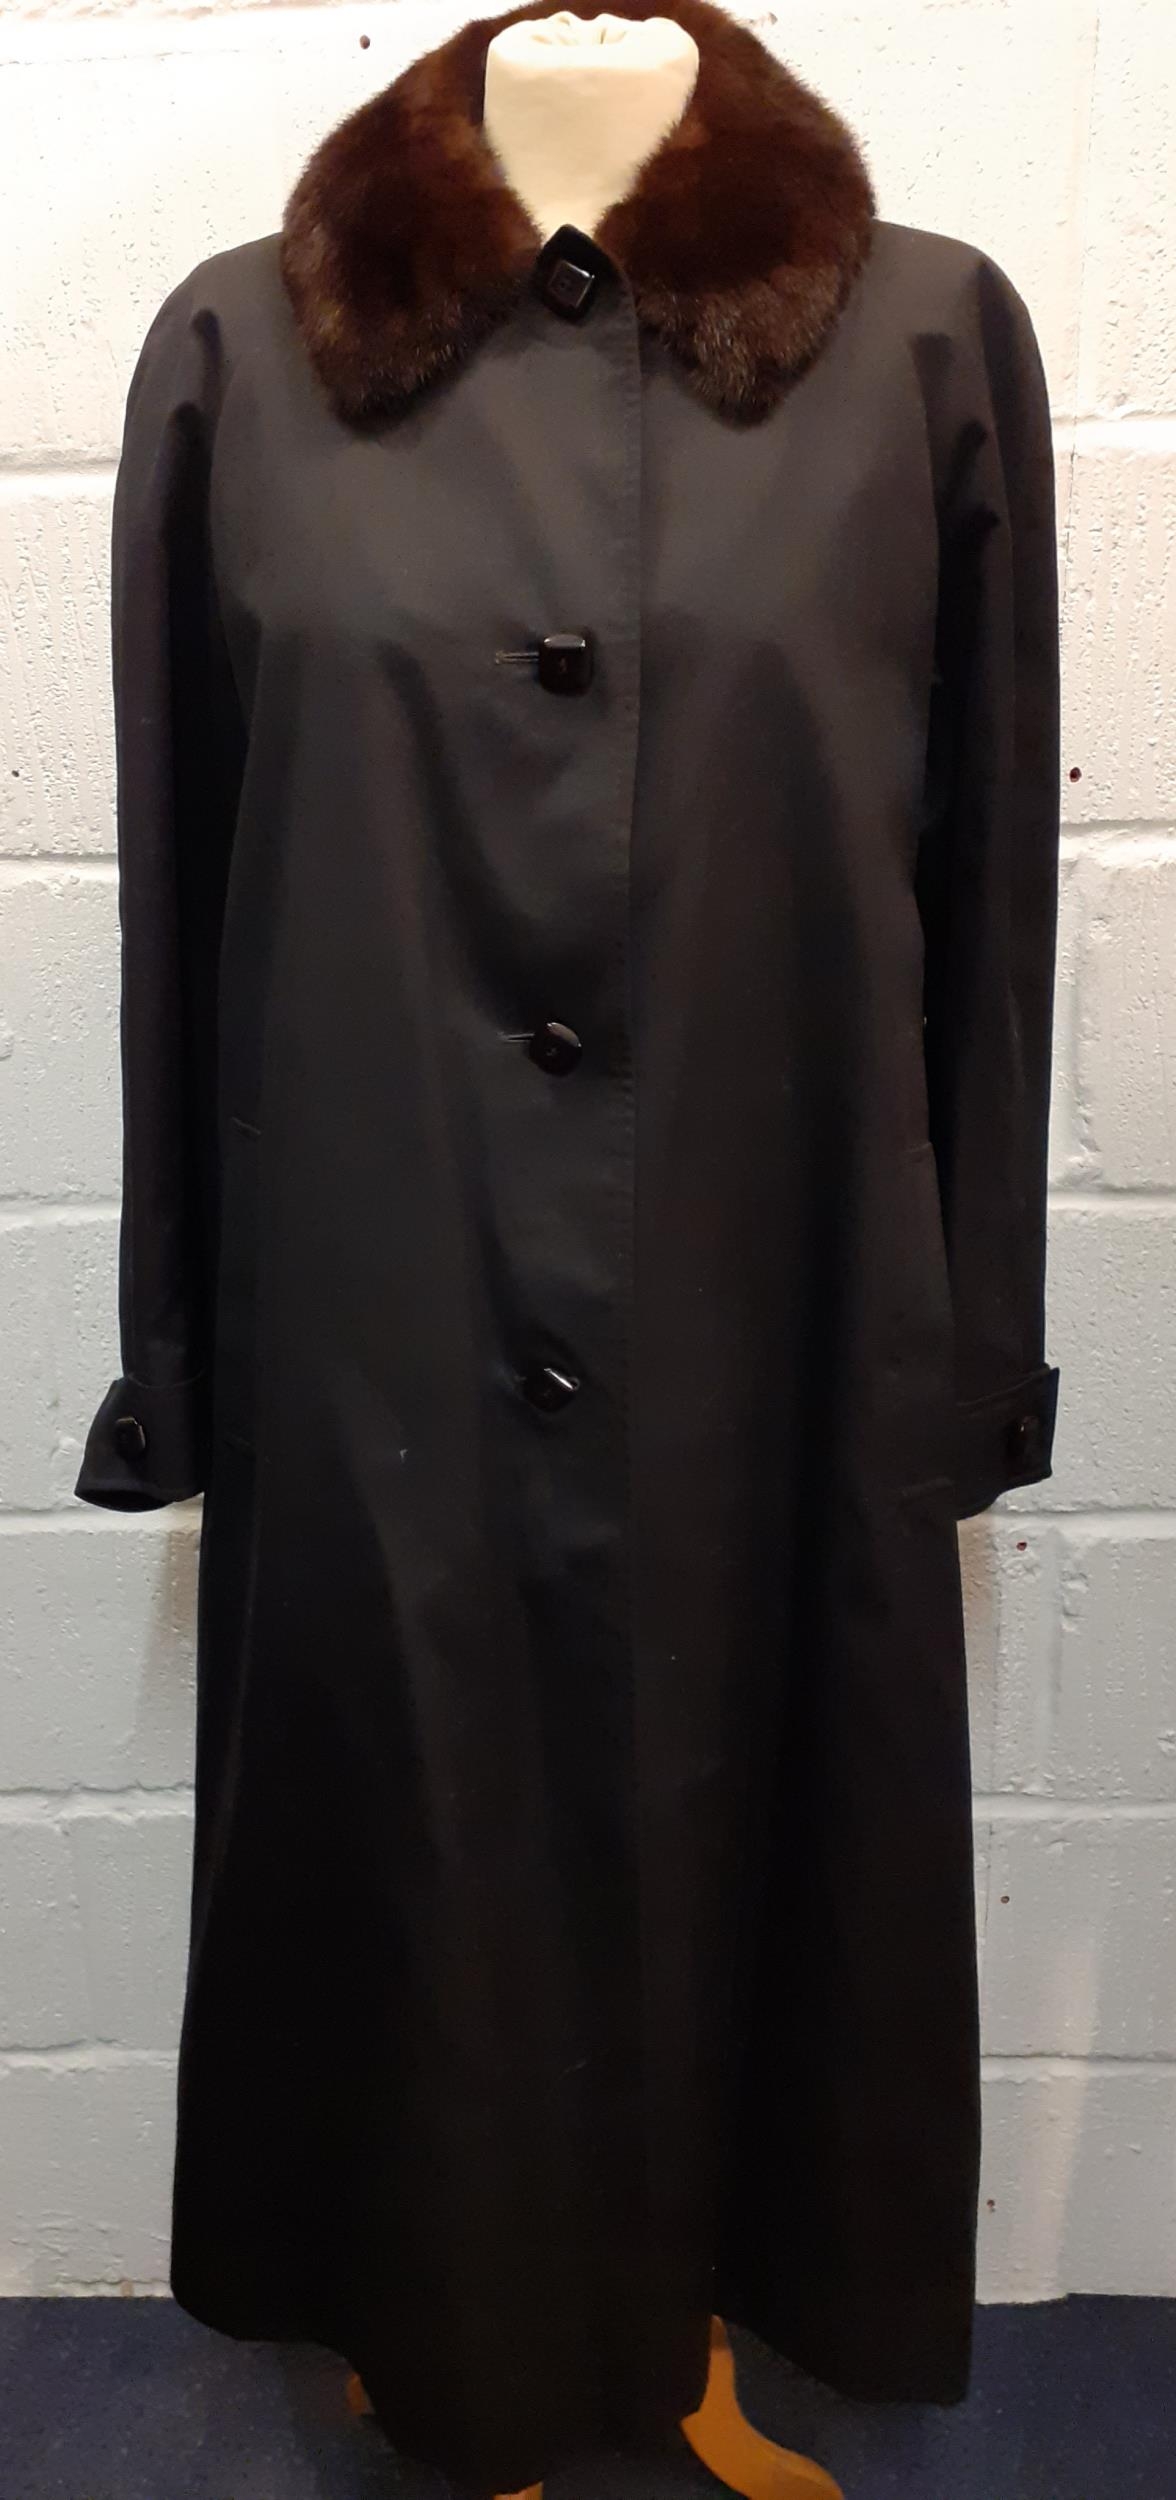 Aquascutum-A vintage Aqua 5 ladies full length black raincoat with brown mink collar and black